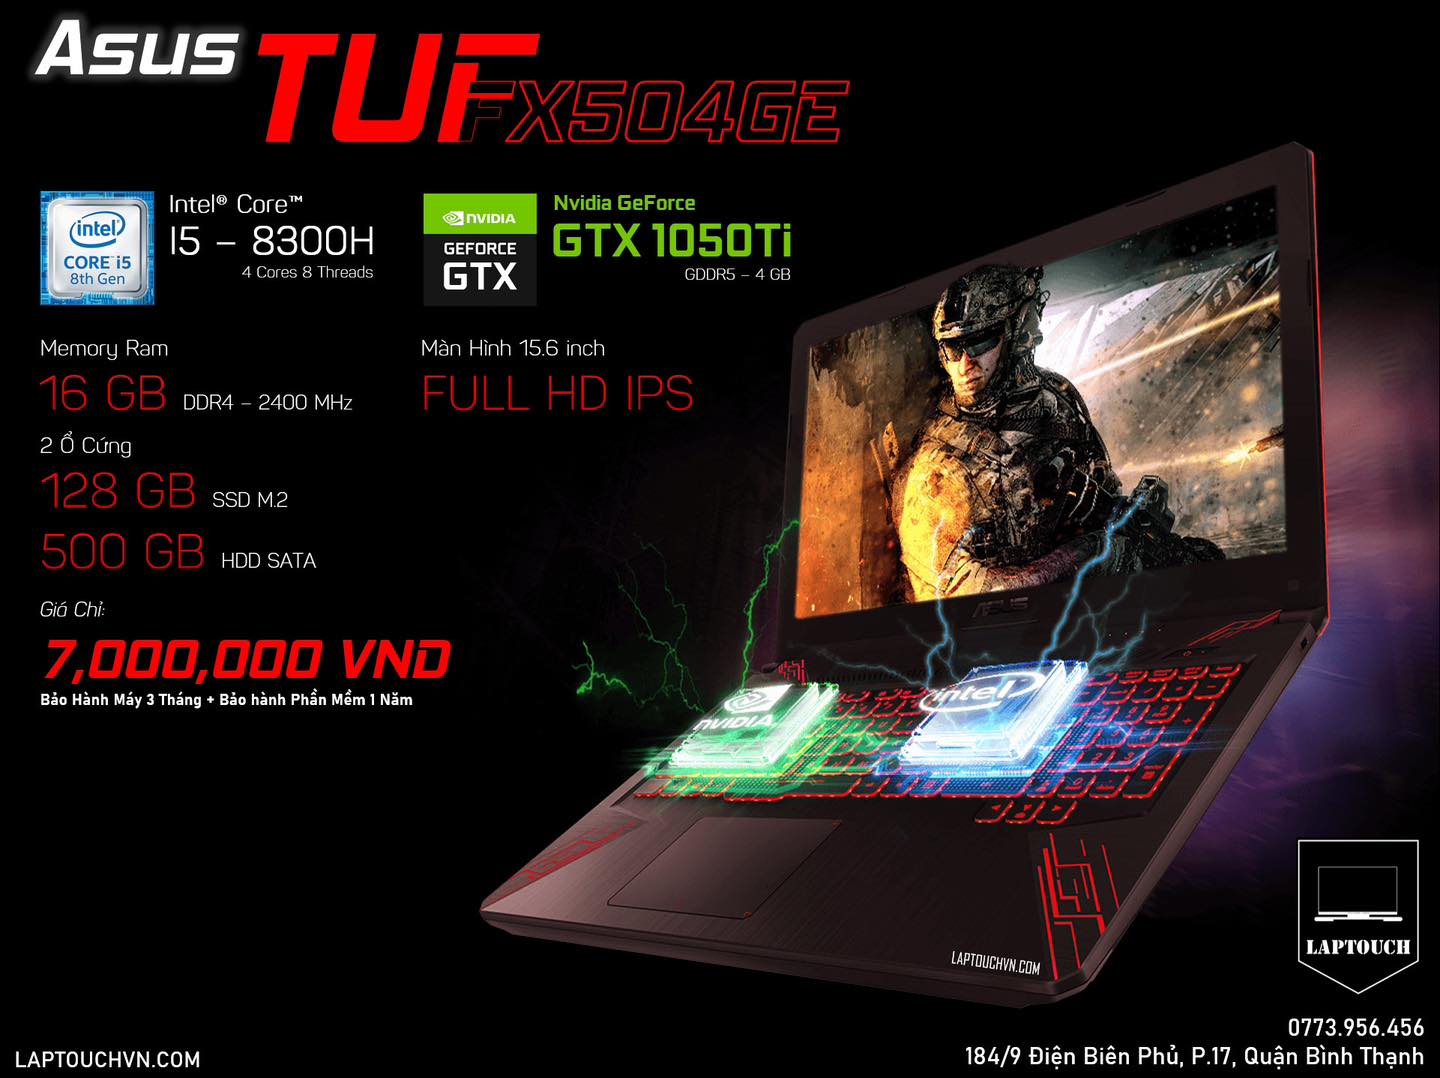 Asus TUF FX504GE [ GTX 1050Ti - 4 GB ]